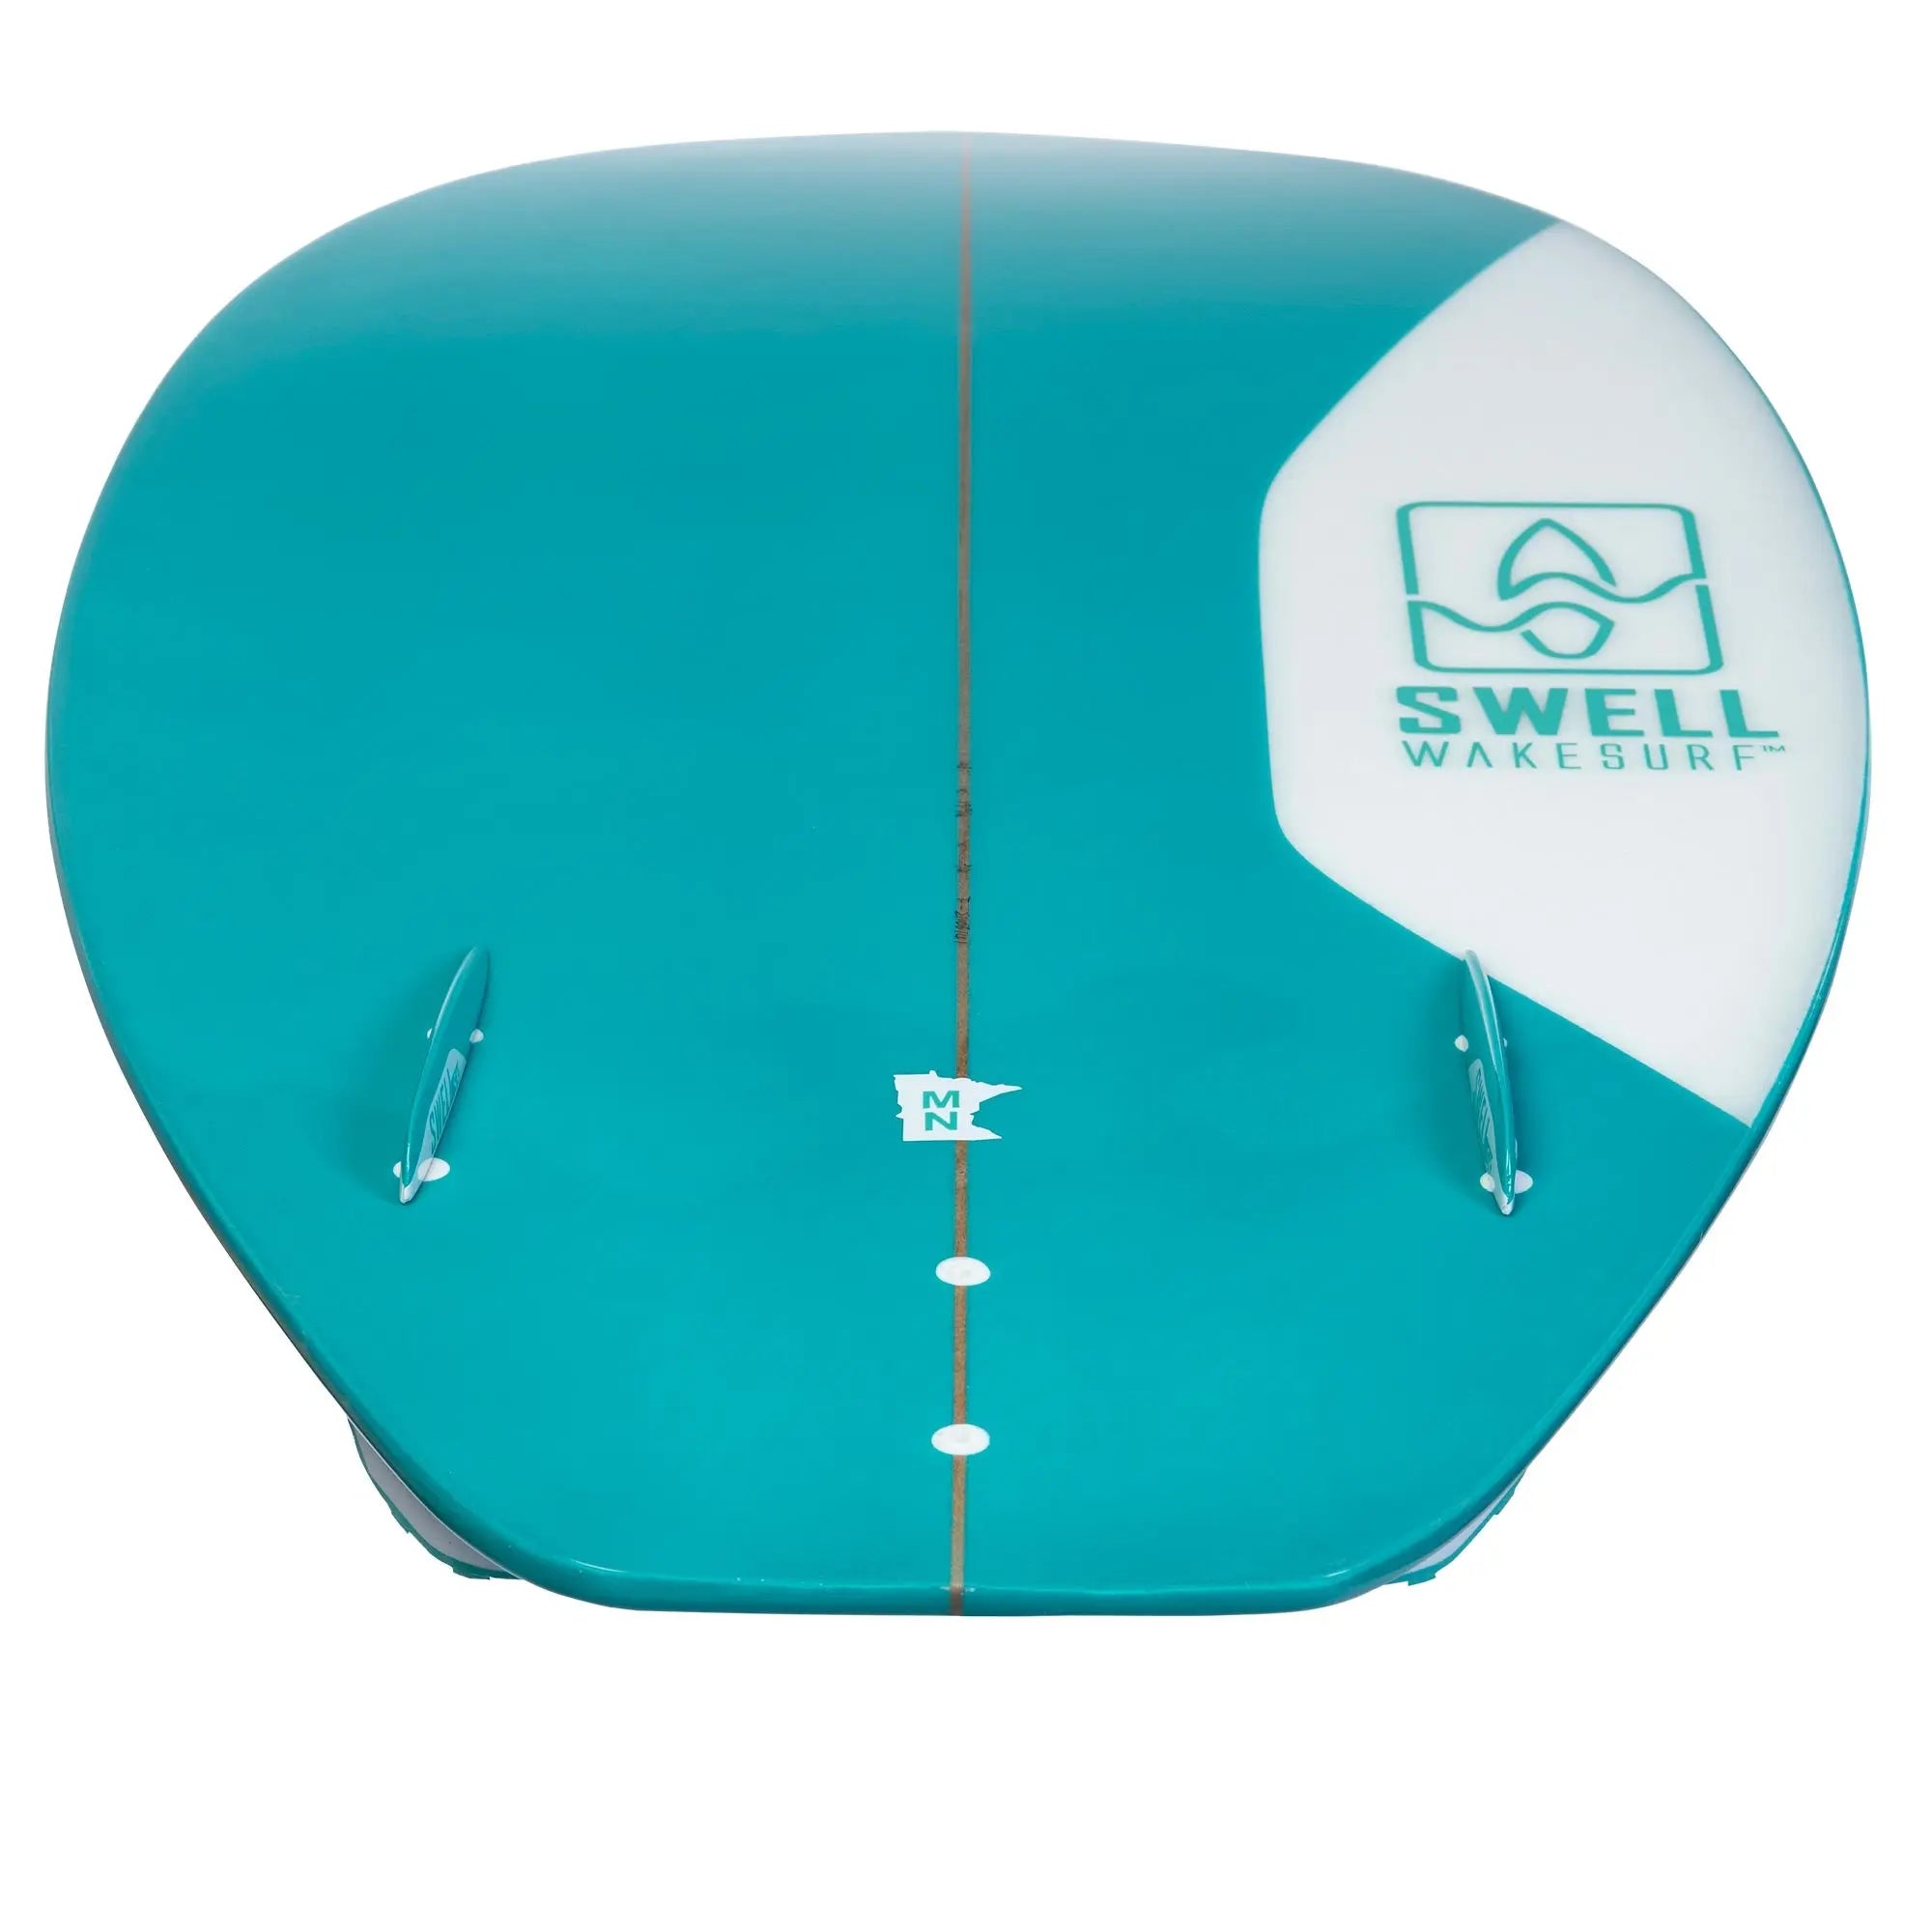 SWELL Wakesurf Pepin - Grom Skim Board - Perfect For Kids SWELL Wakesurf